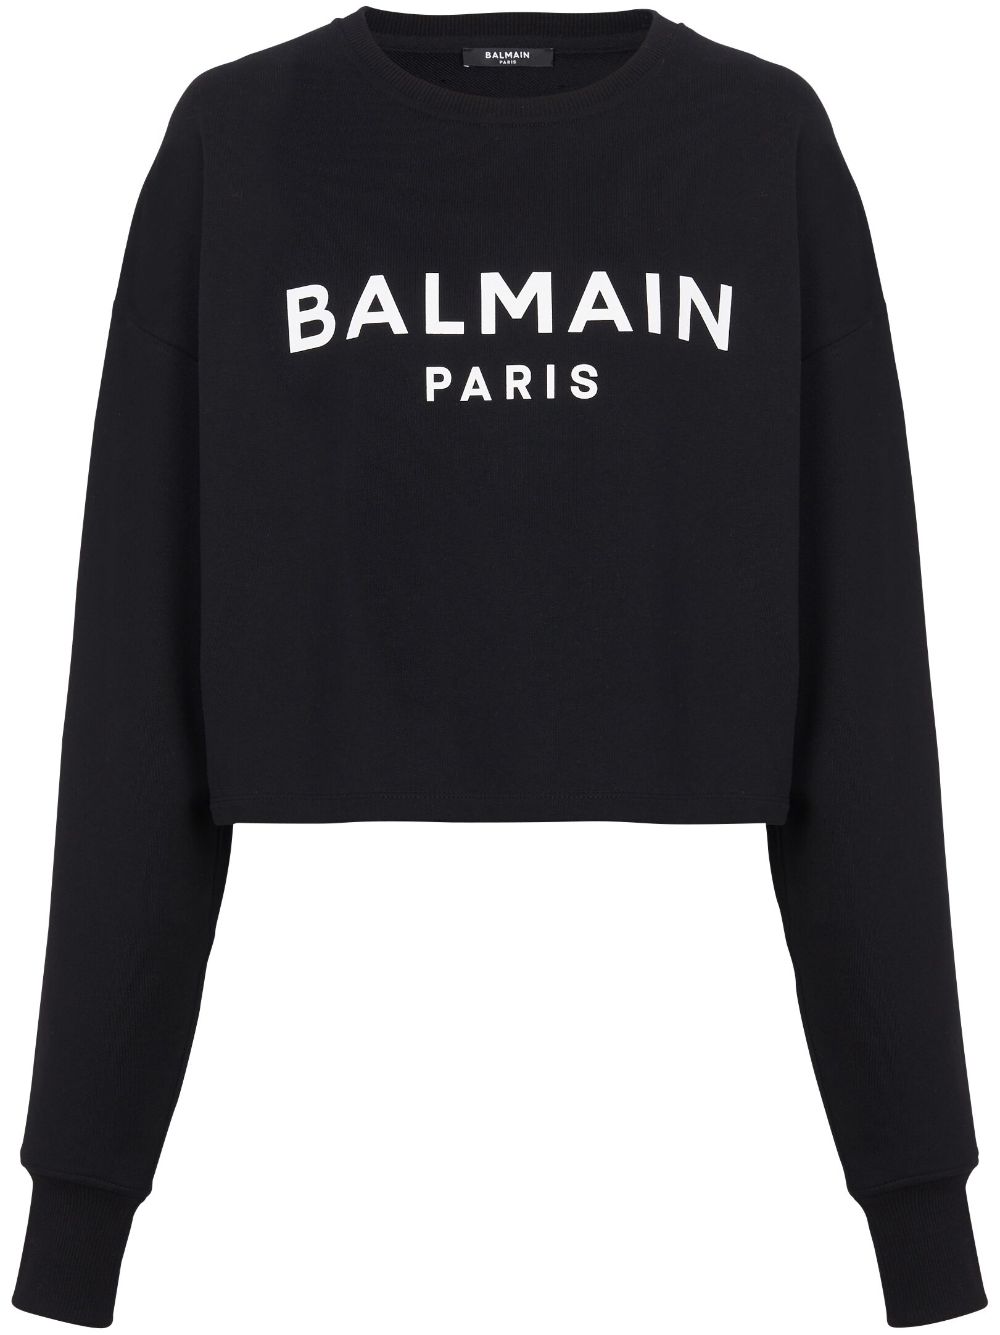 Balmain Paris cotton sweatshirt - Nero